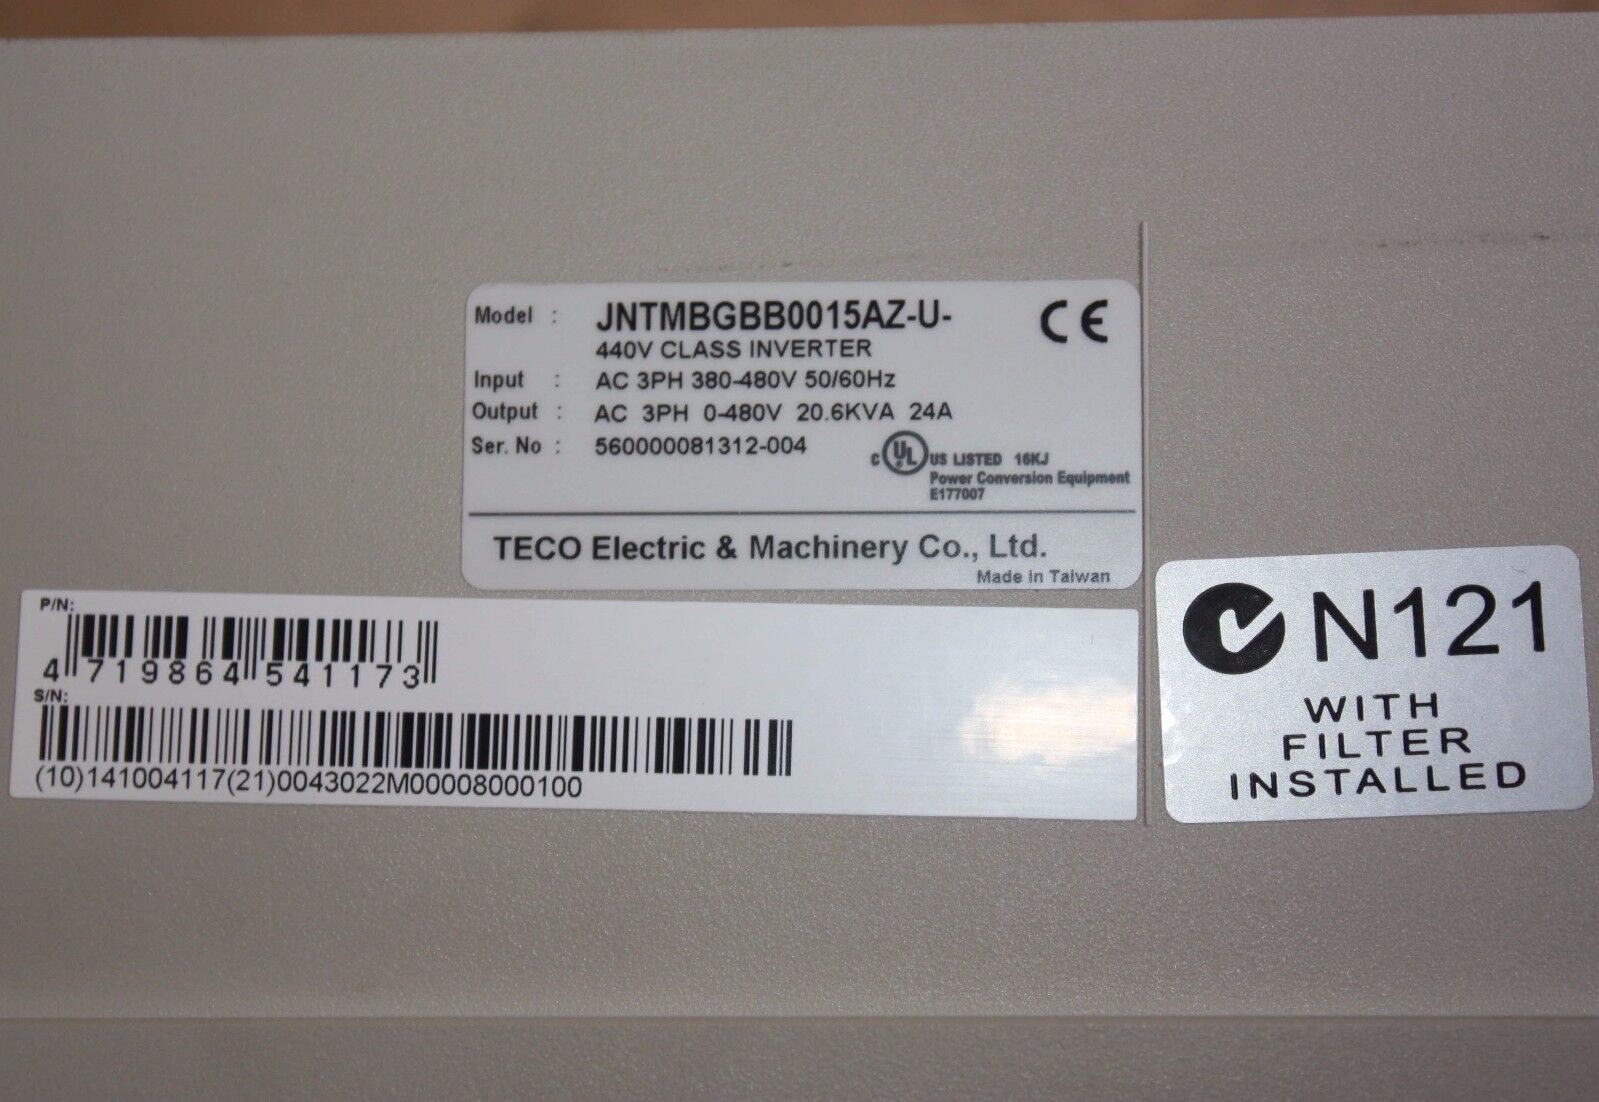 Teco Speecon 7200MA VSD JNTMBGBB0015AZ-U 440V CLASS INVERTER 20.6KVA ...